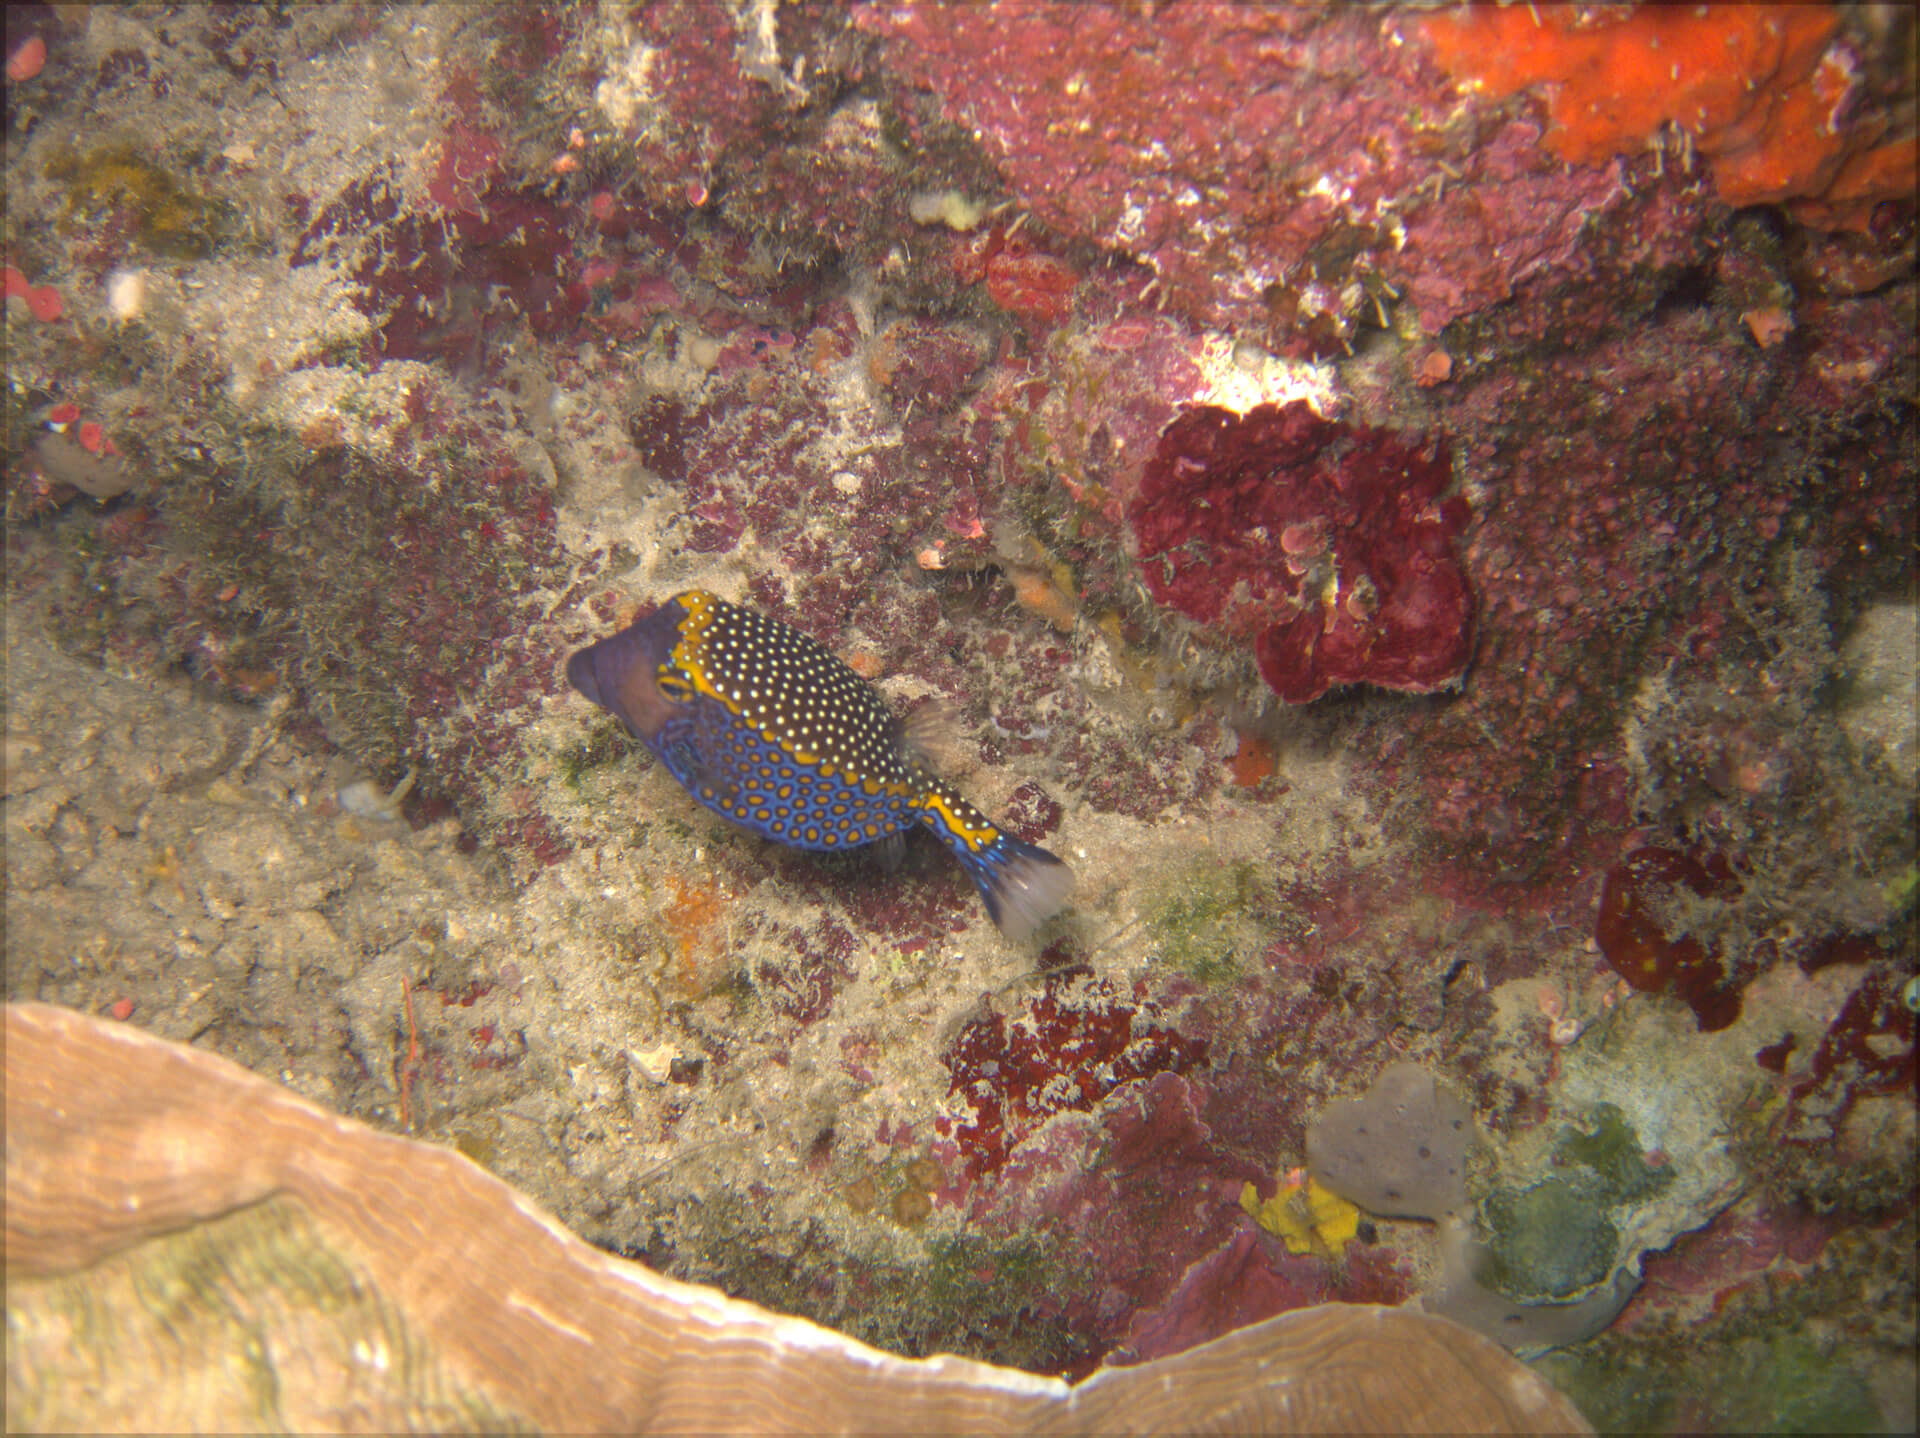 Bunaken Island, Manado, Indonesia - Whitespotted box fish